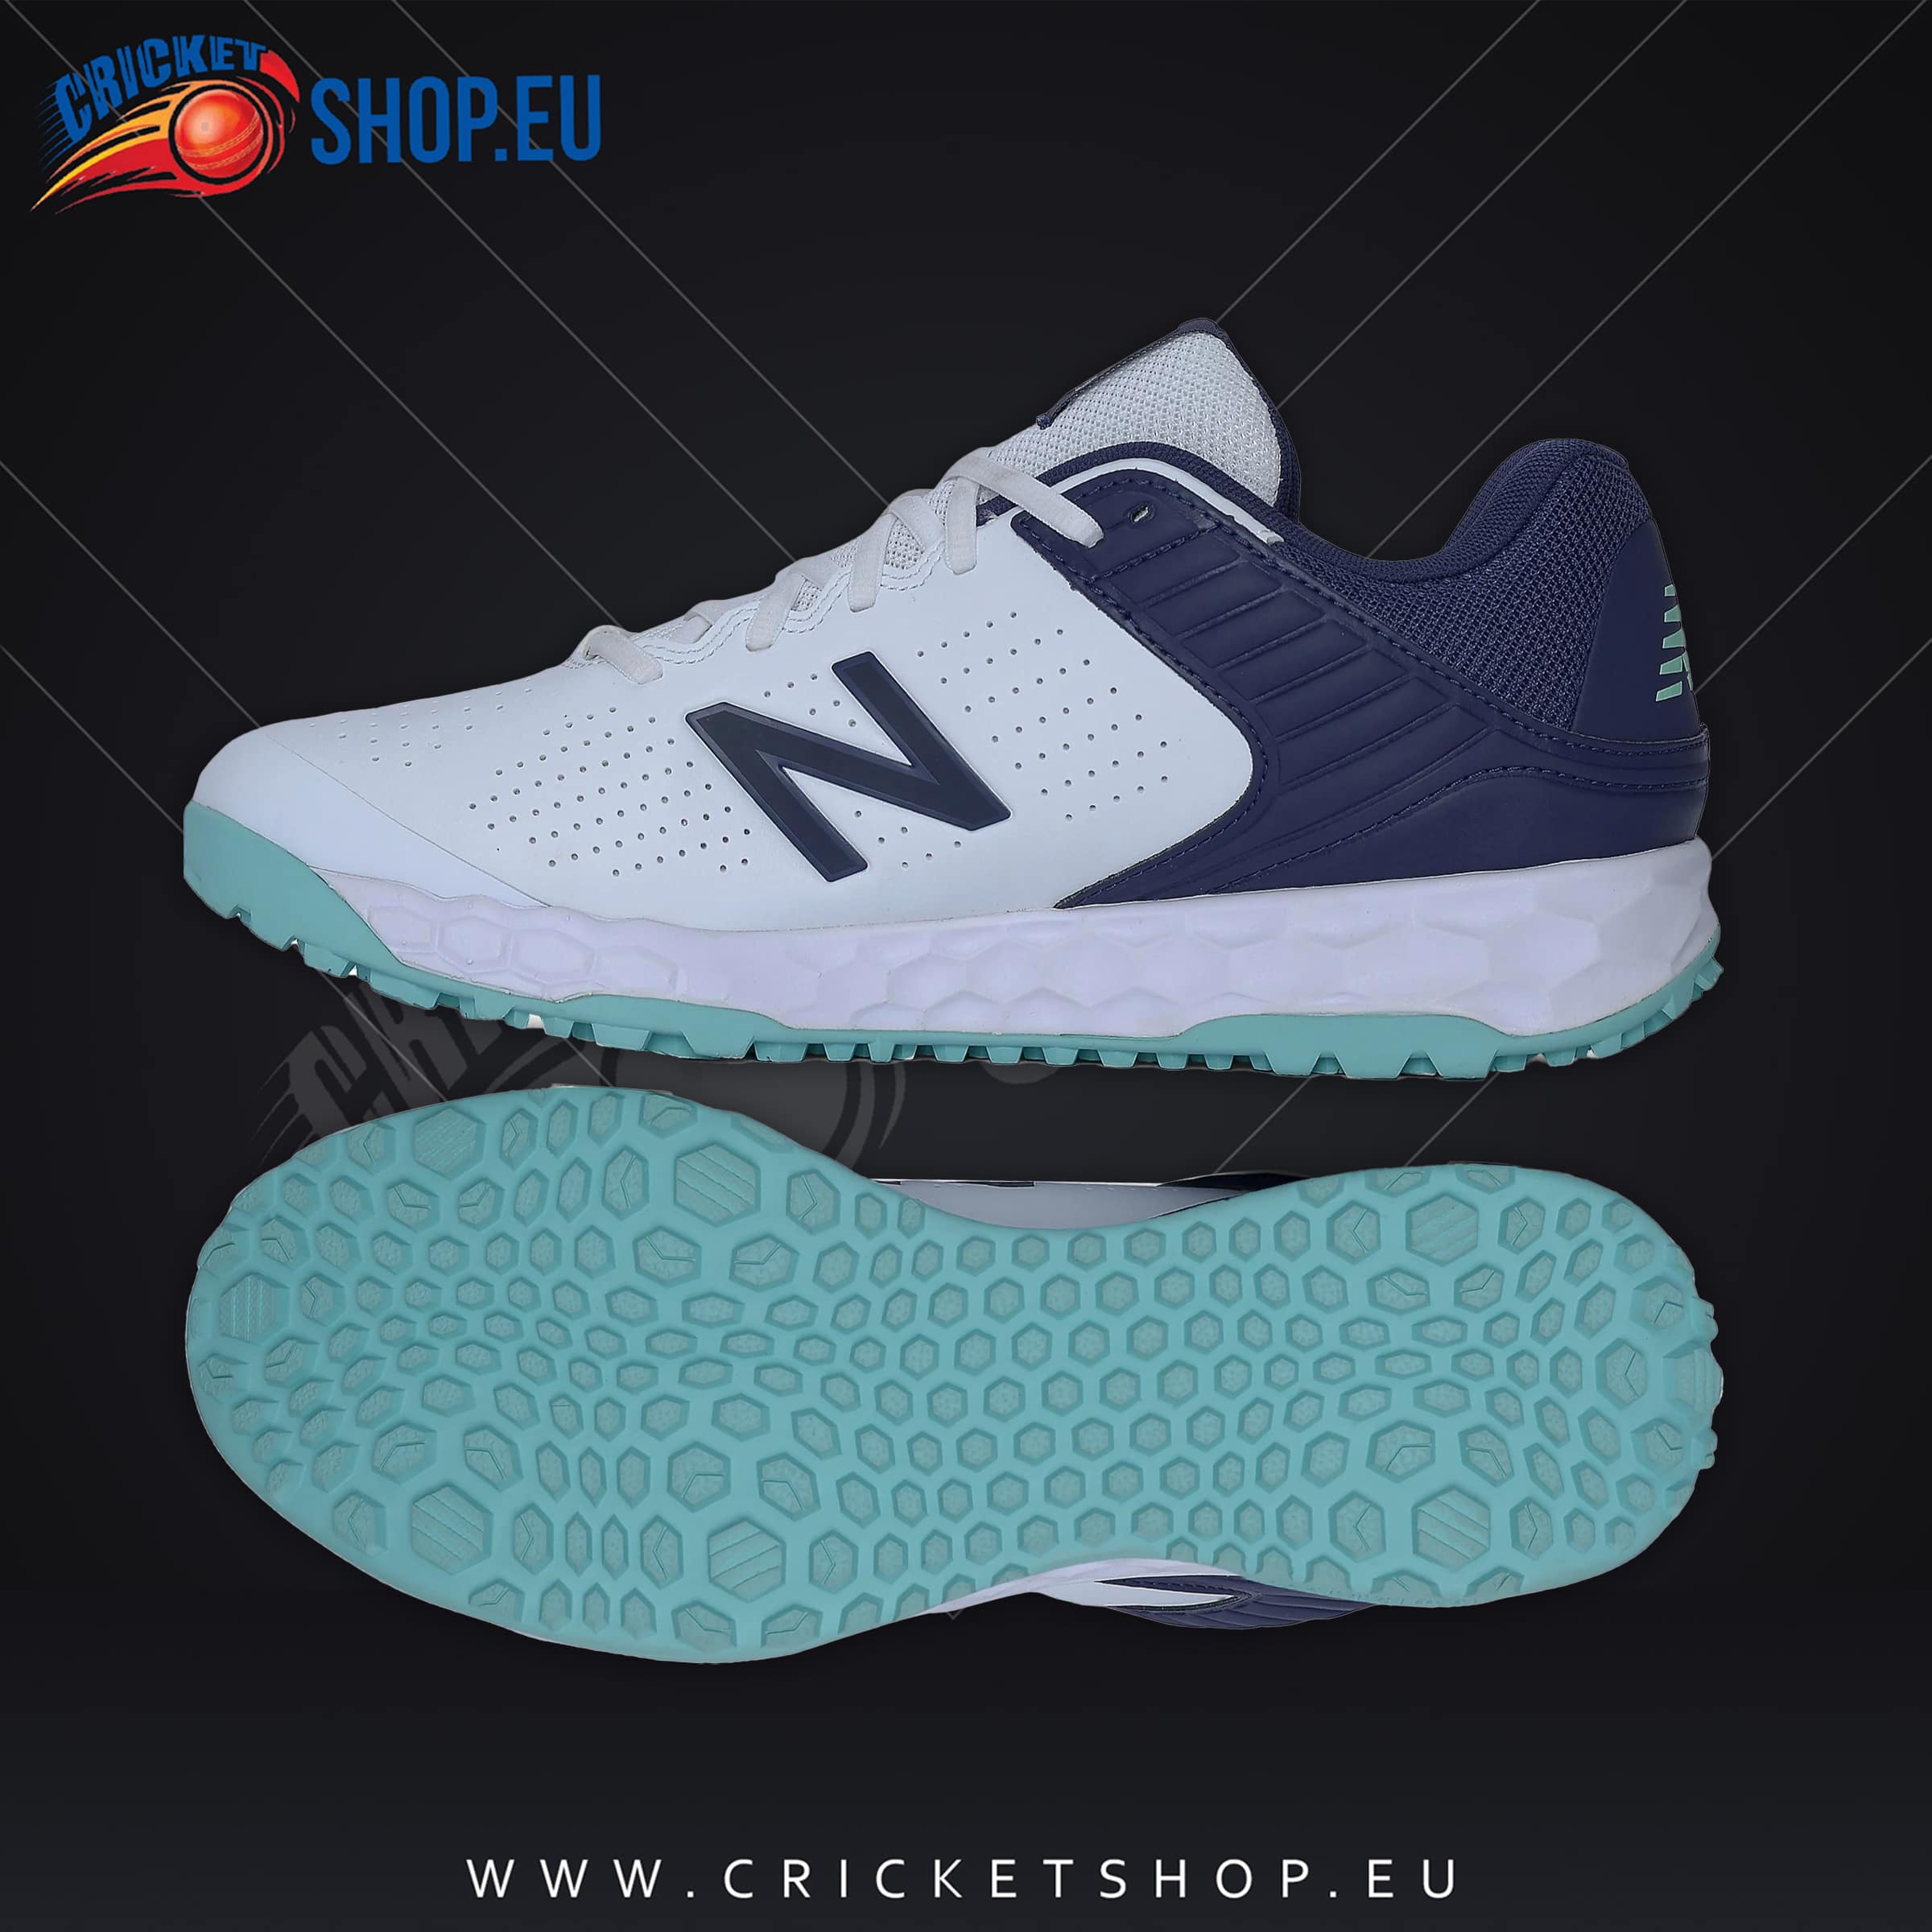 New Balance CK4020-J4 Cricket Shoes